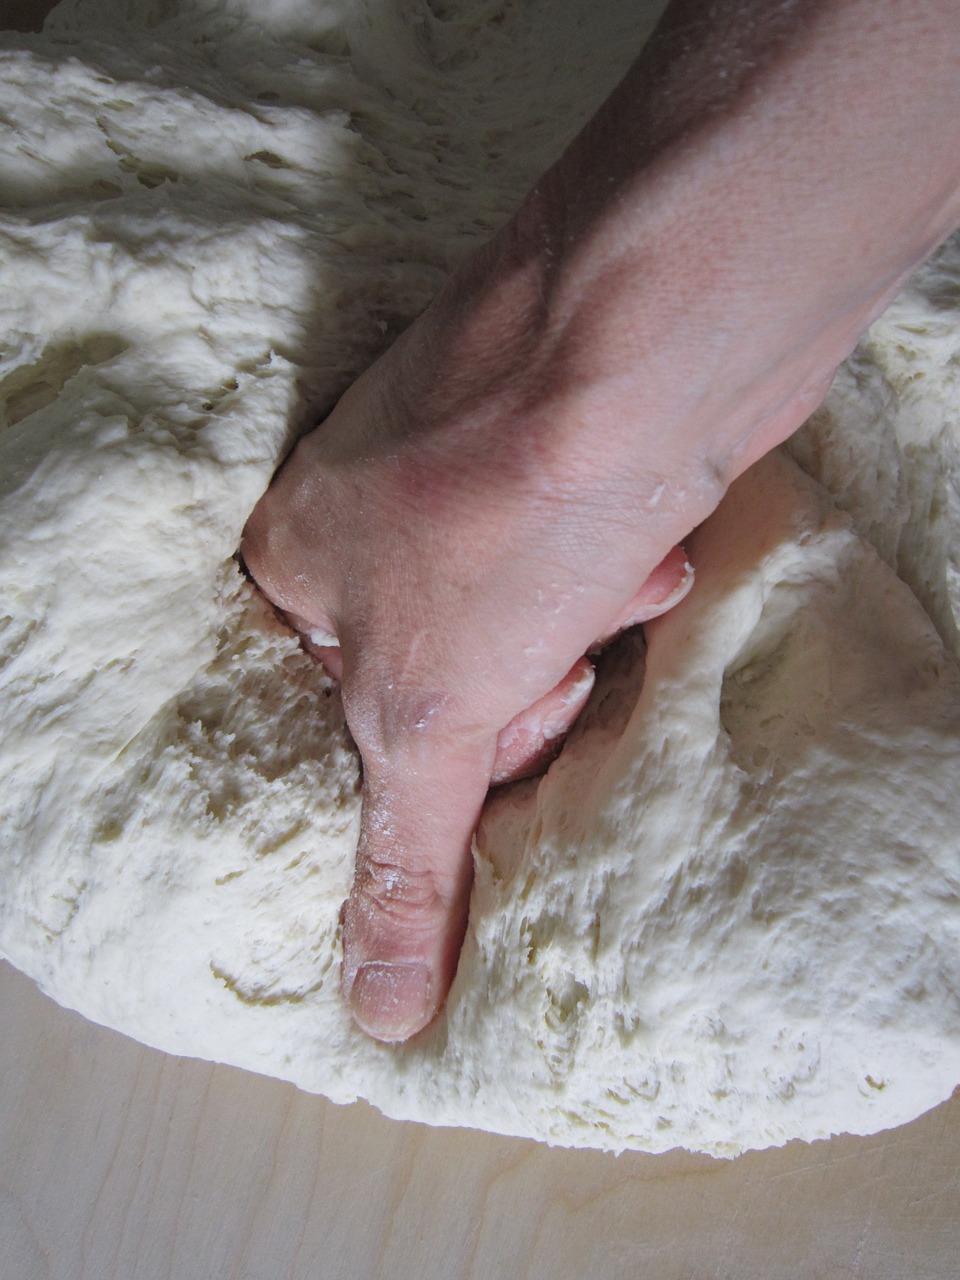 dough knead bake free photo